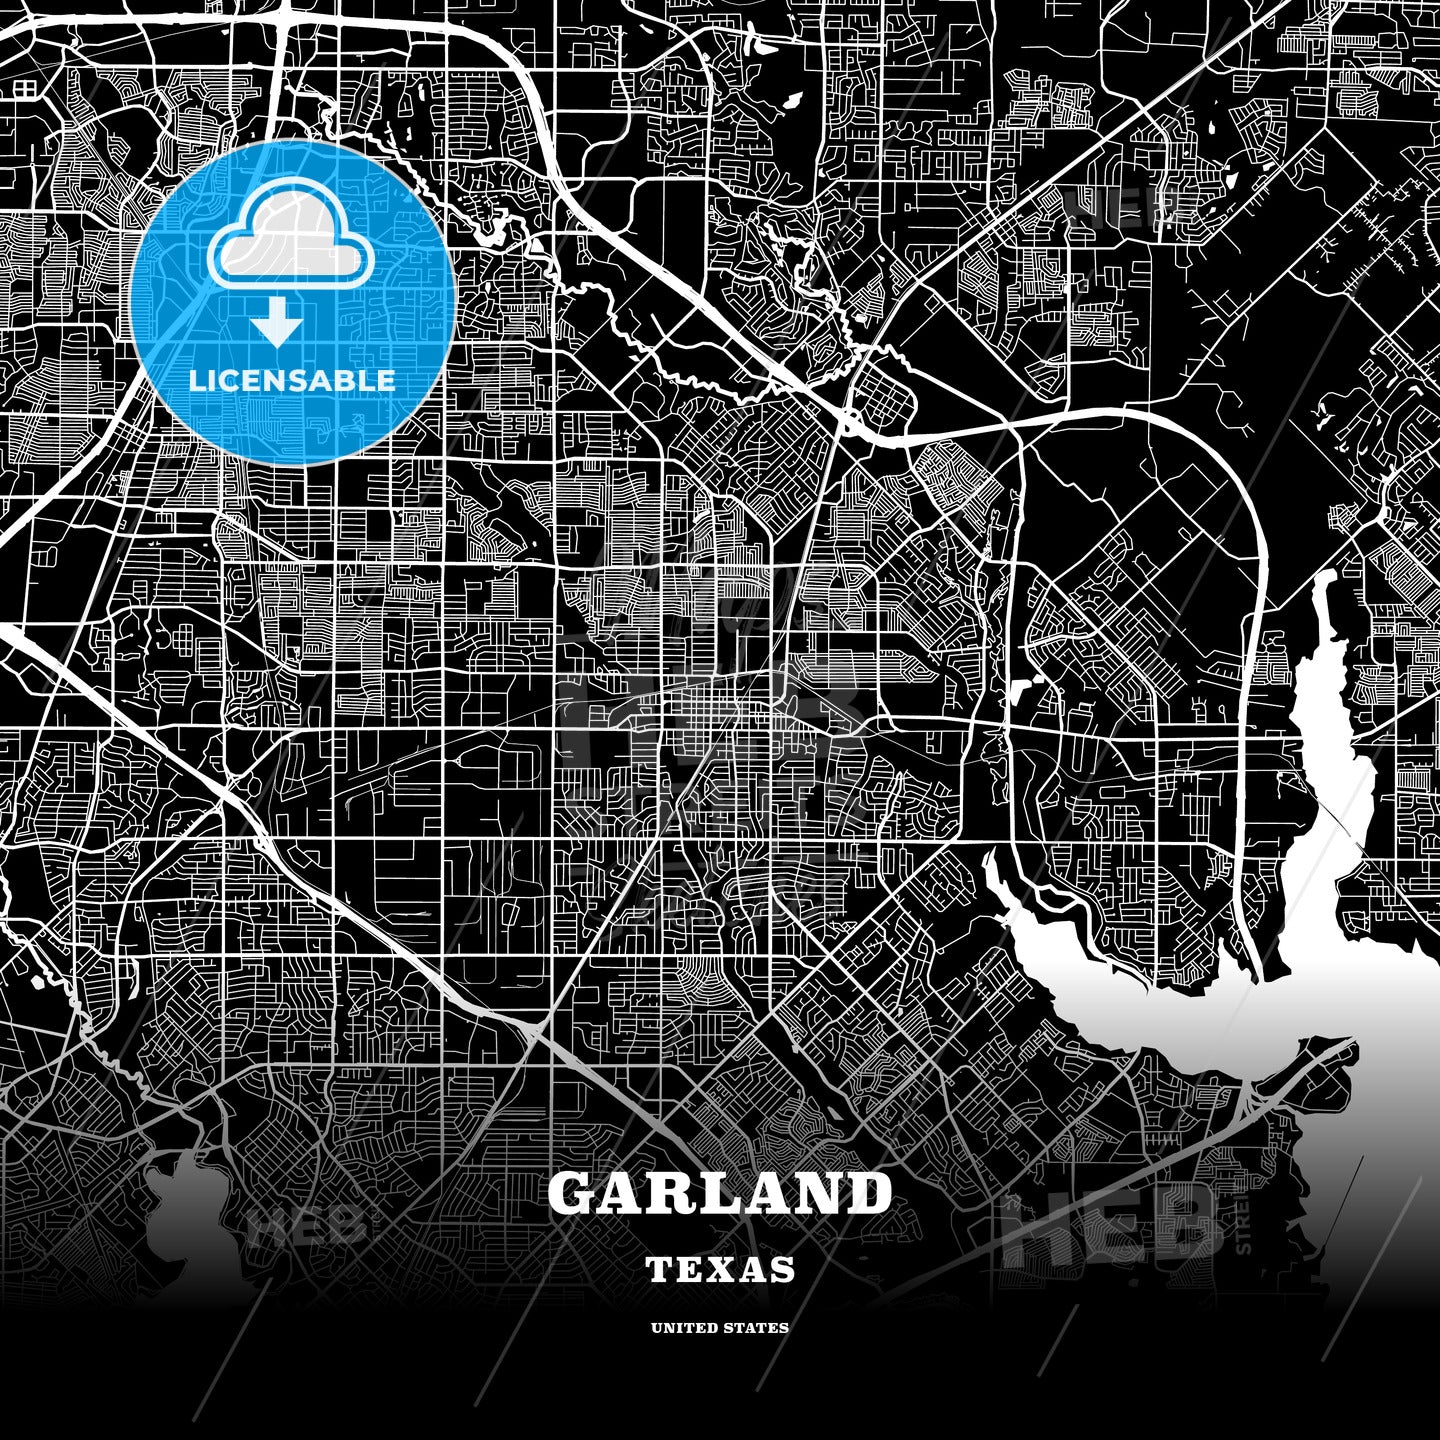 Garland, Texas, USA map